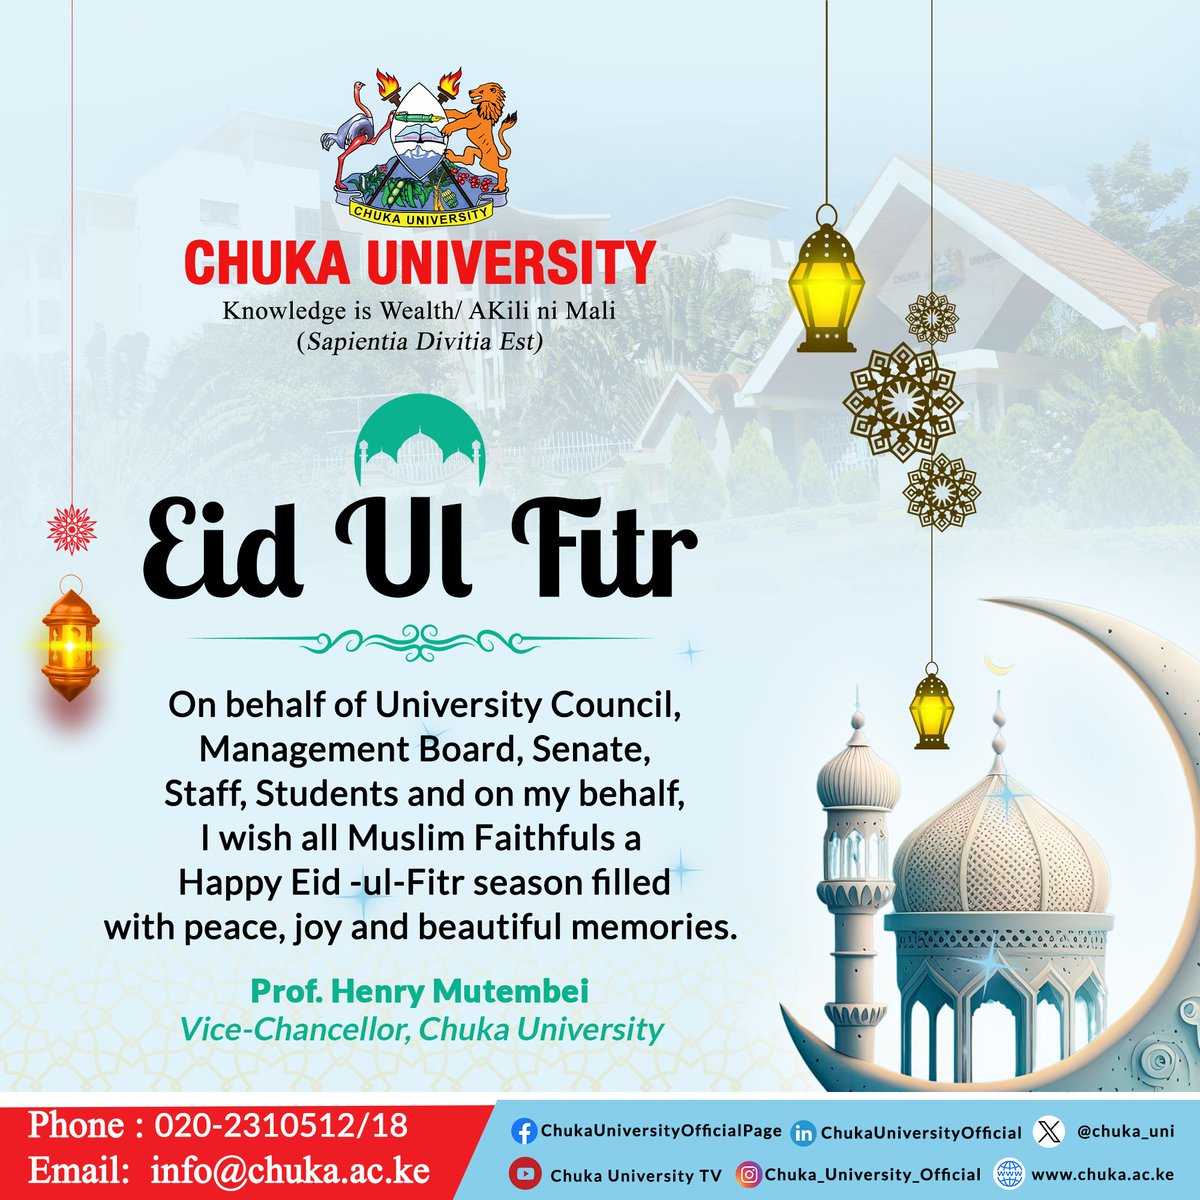 #EidMubarak from Chuka University. #knowledgeiswealth